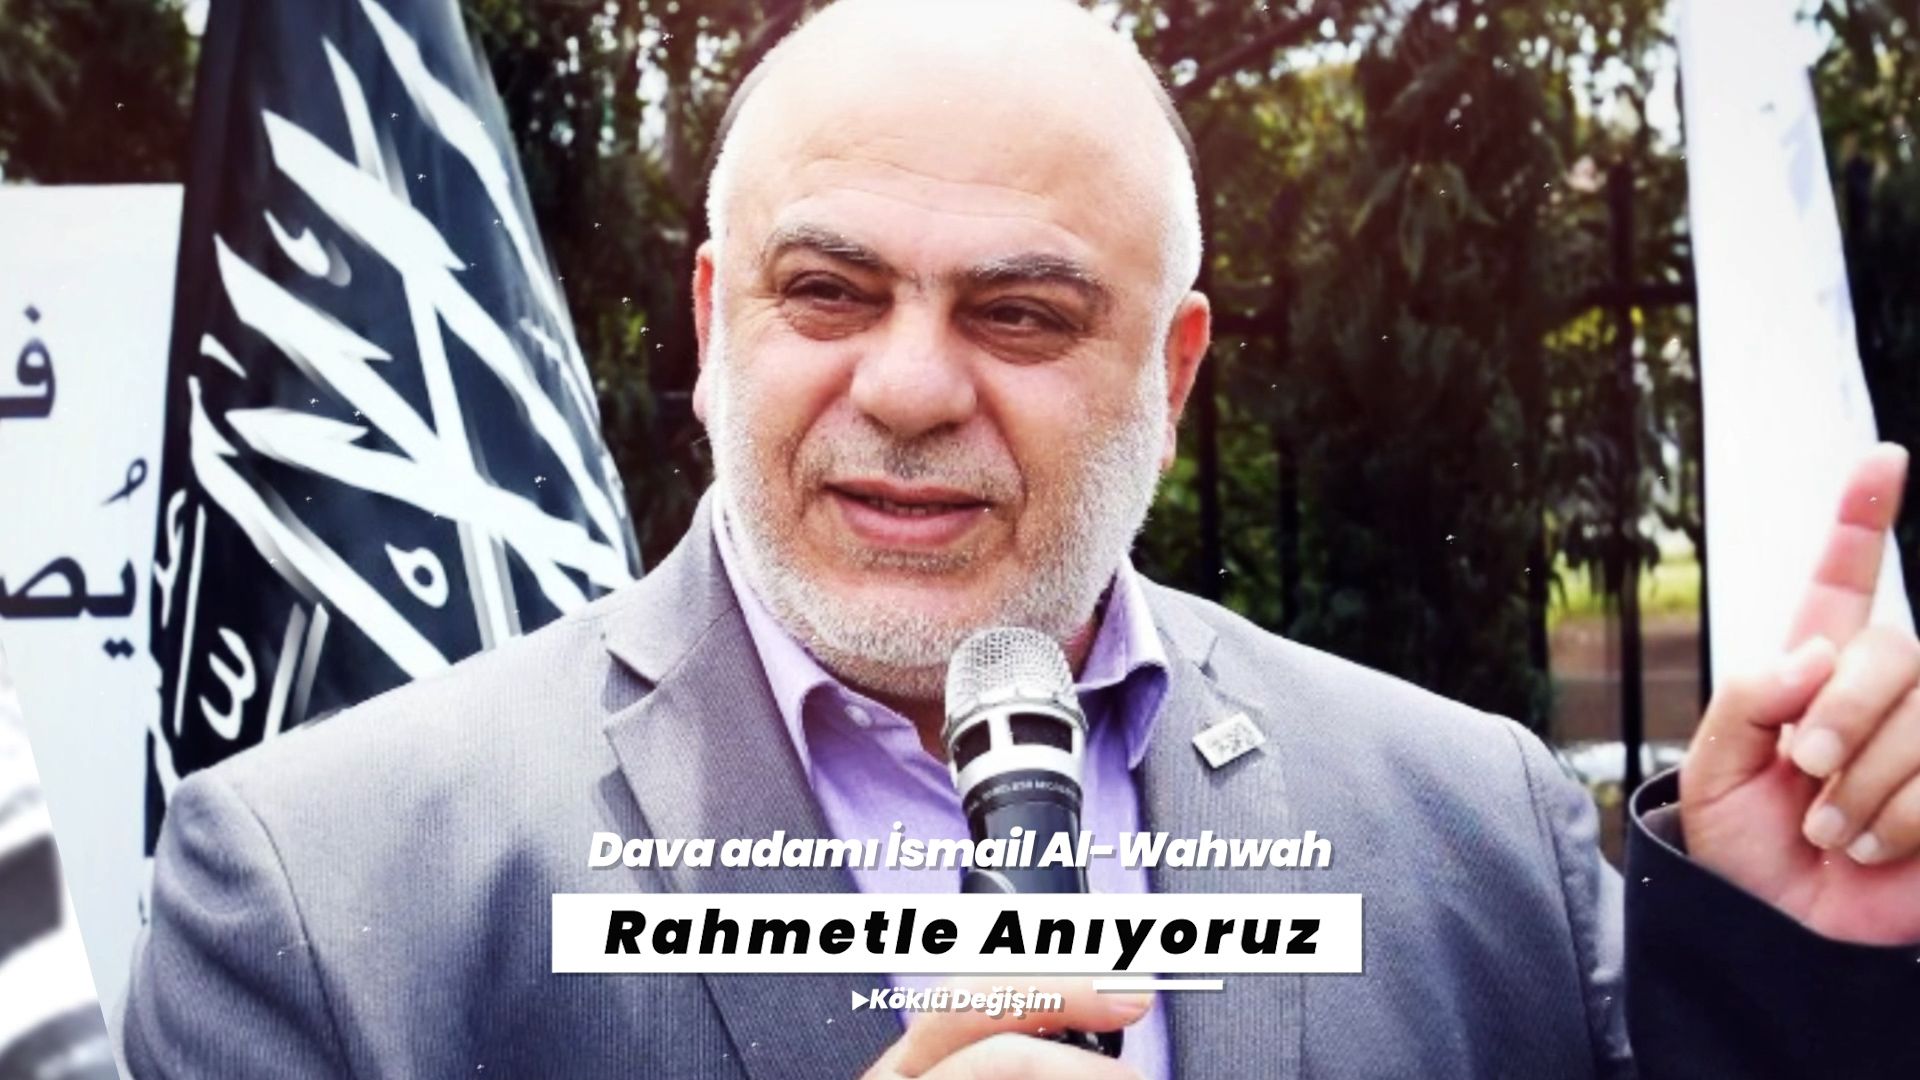 Dava Adamı İsmail Al-Wahwah'a Rahmet Diliyoruz...